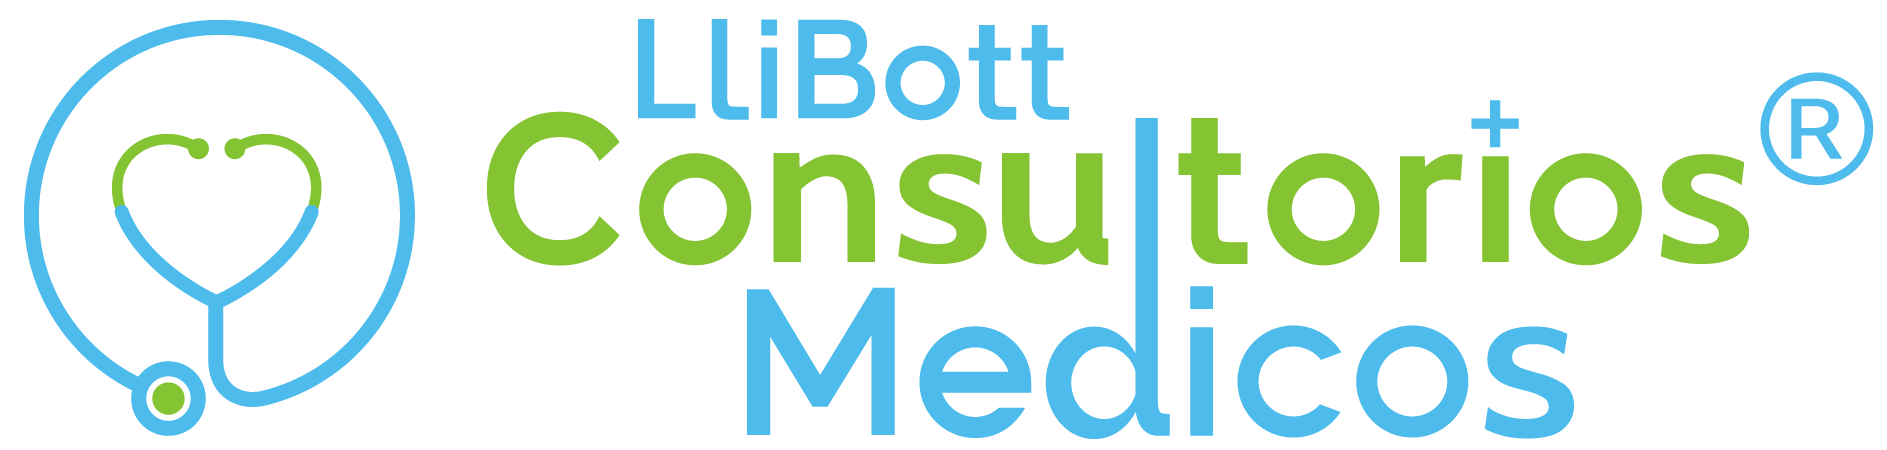 LliBott Consultorios Medicos's Logo